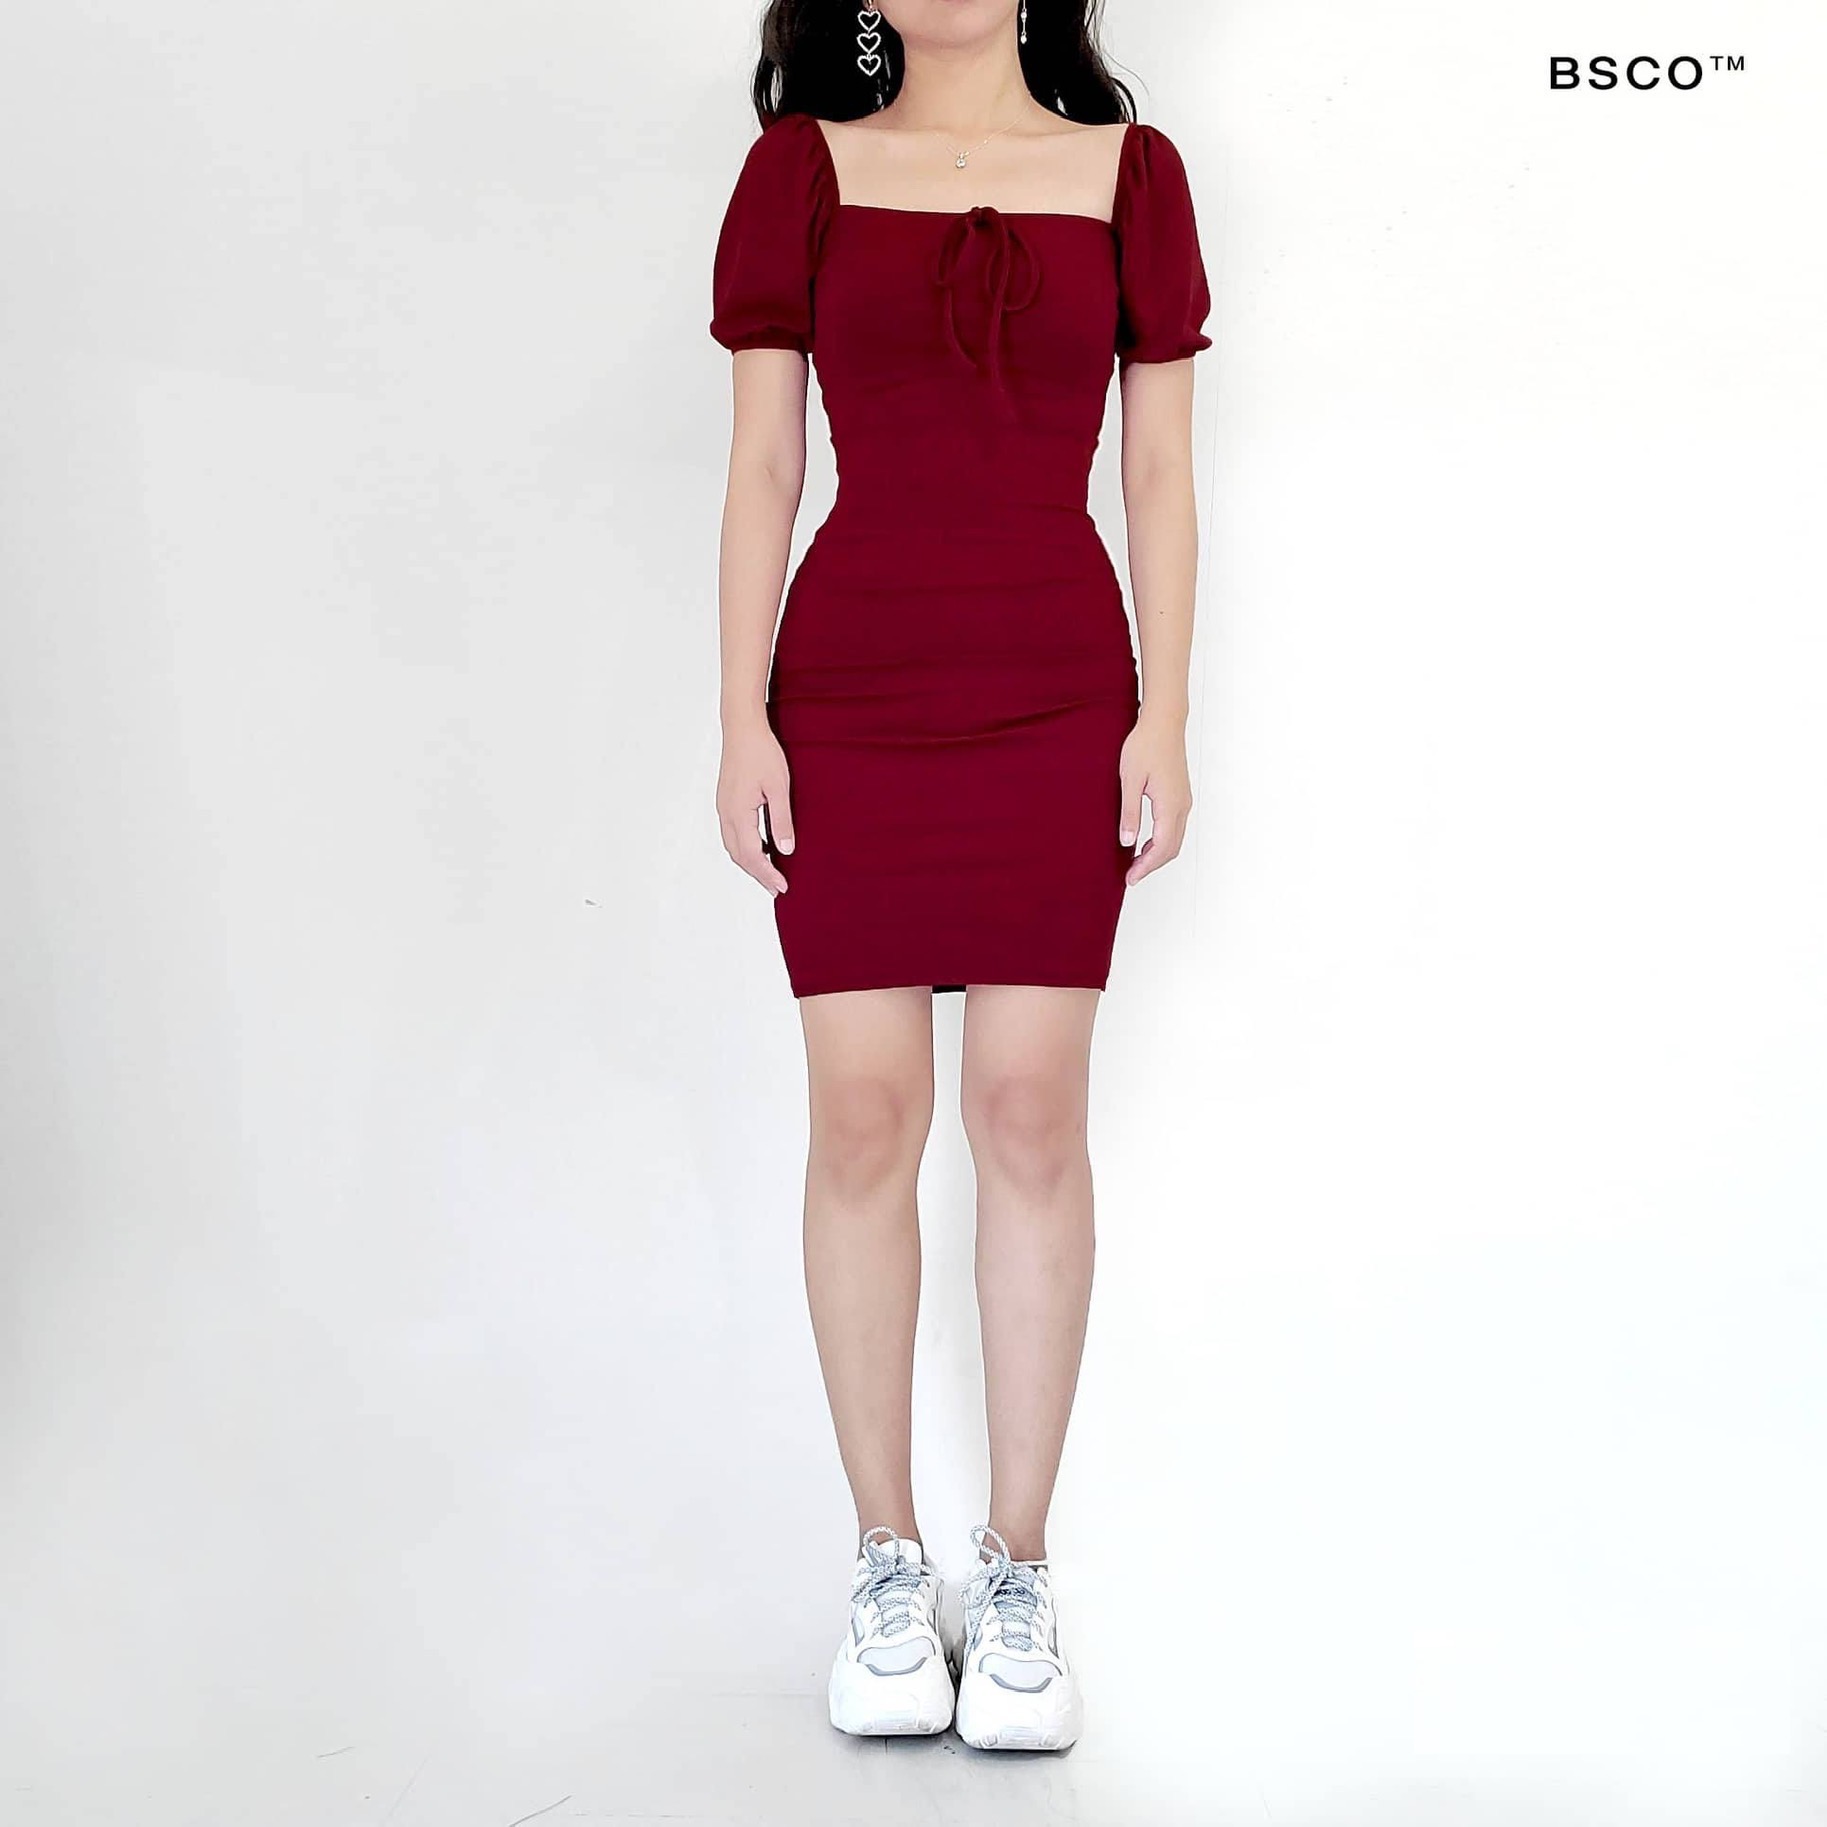 Maroon Puff Sleeveless Body-fitted Dress, Perfect Hauler